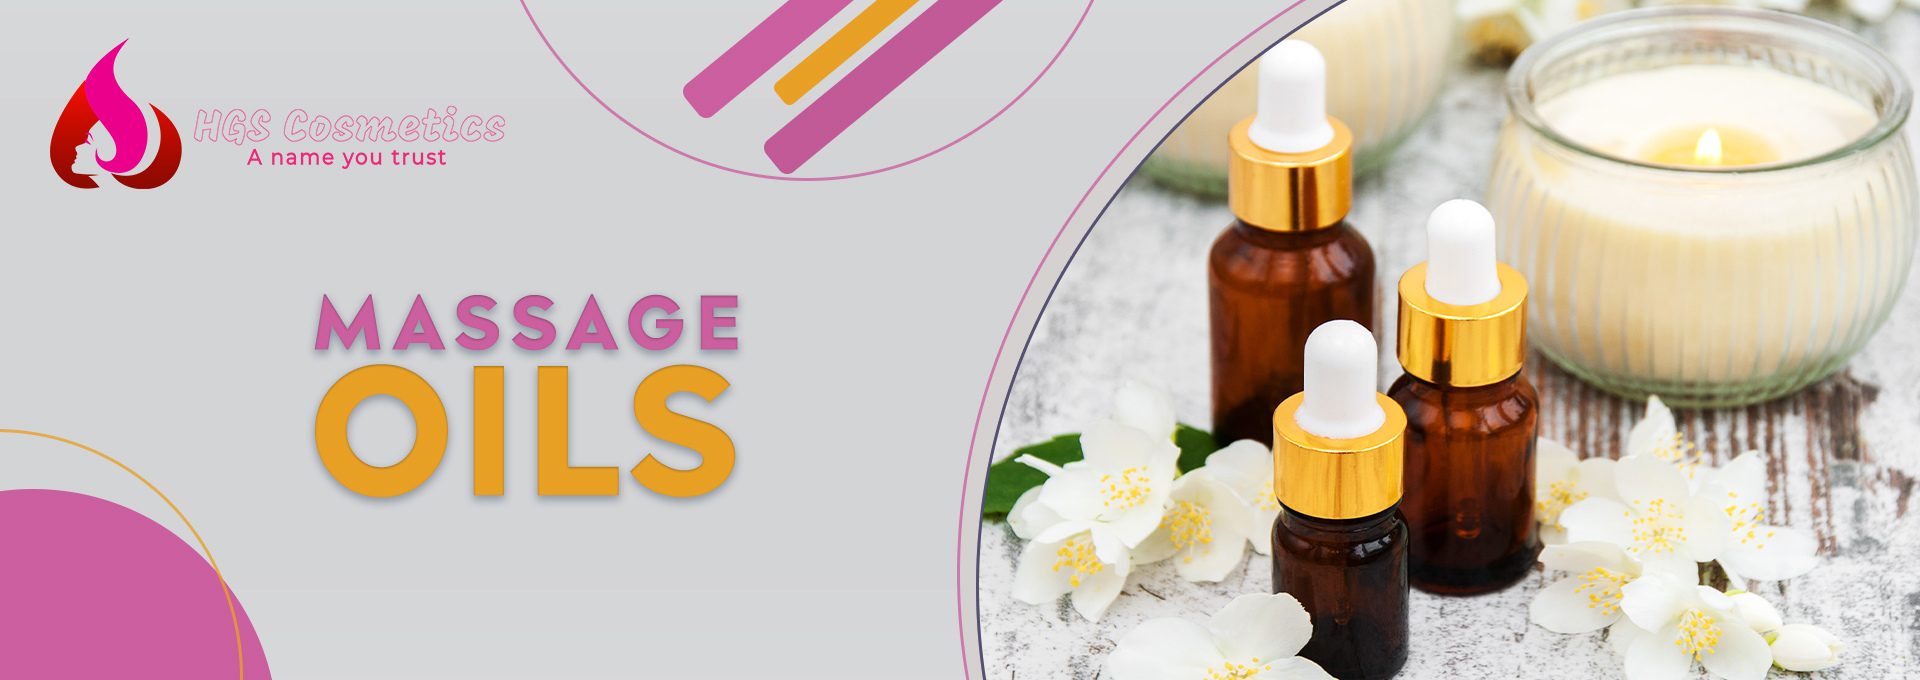 Shop Best Massage Oils products Online @ HGS Cosmetics